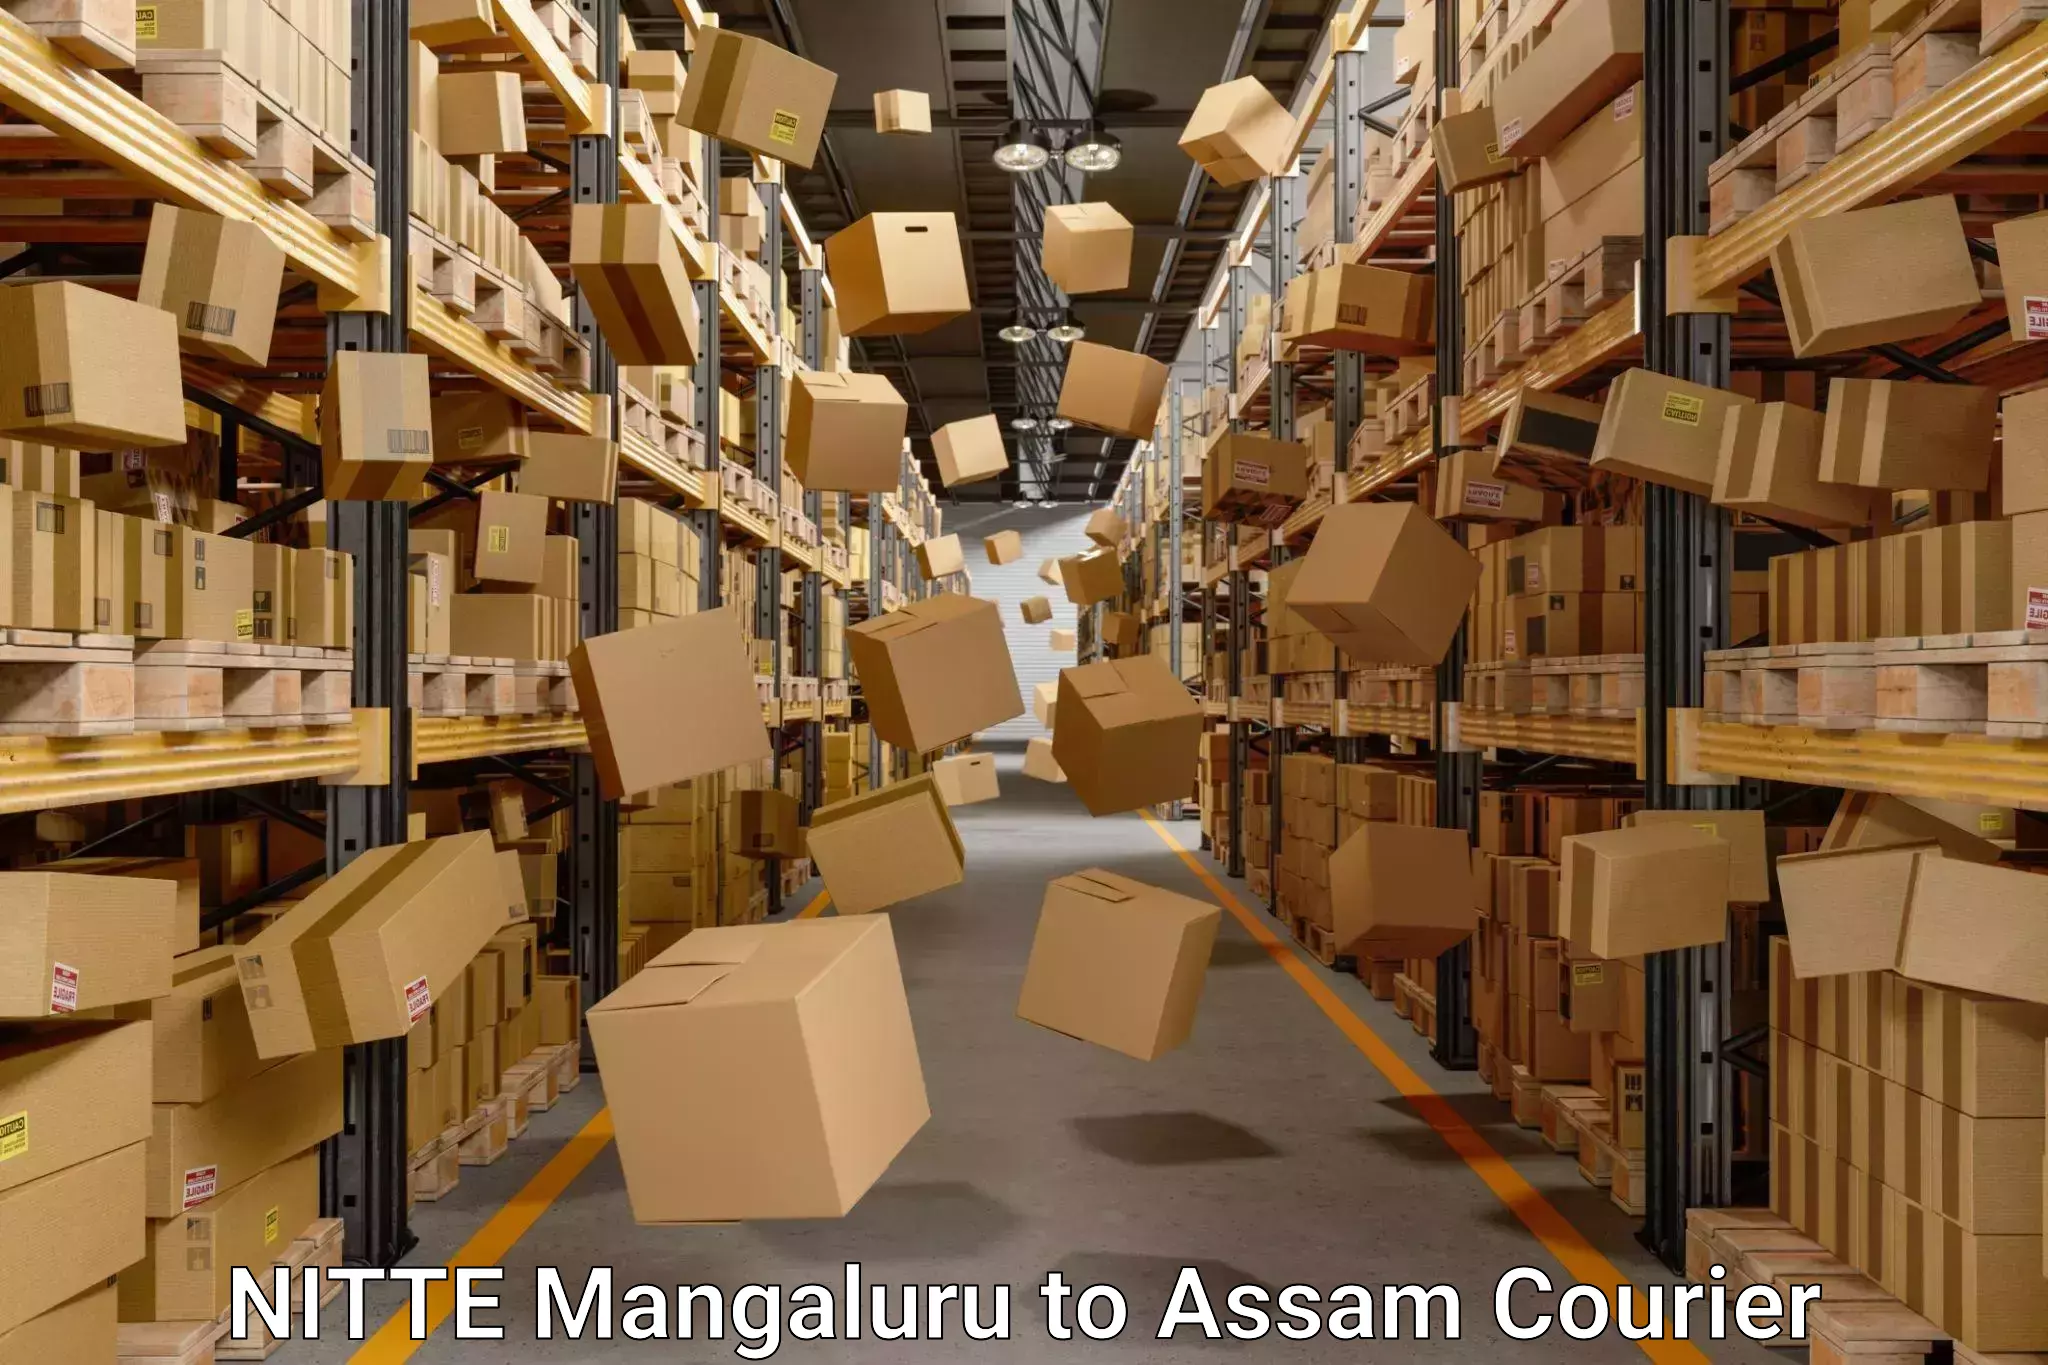 Efficient moving and packing NITTE Mangaluru to Tezpur University